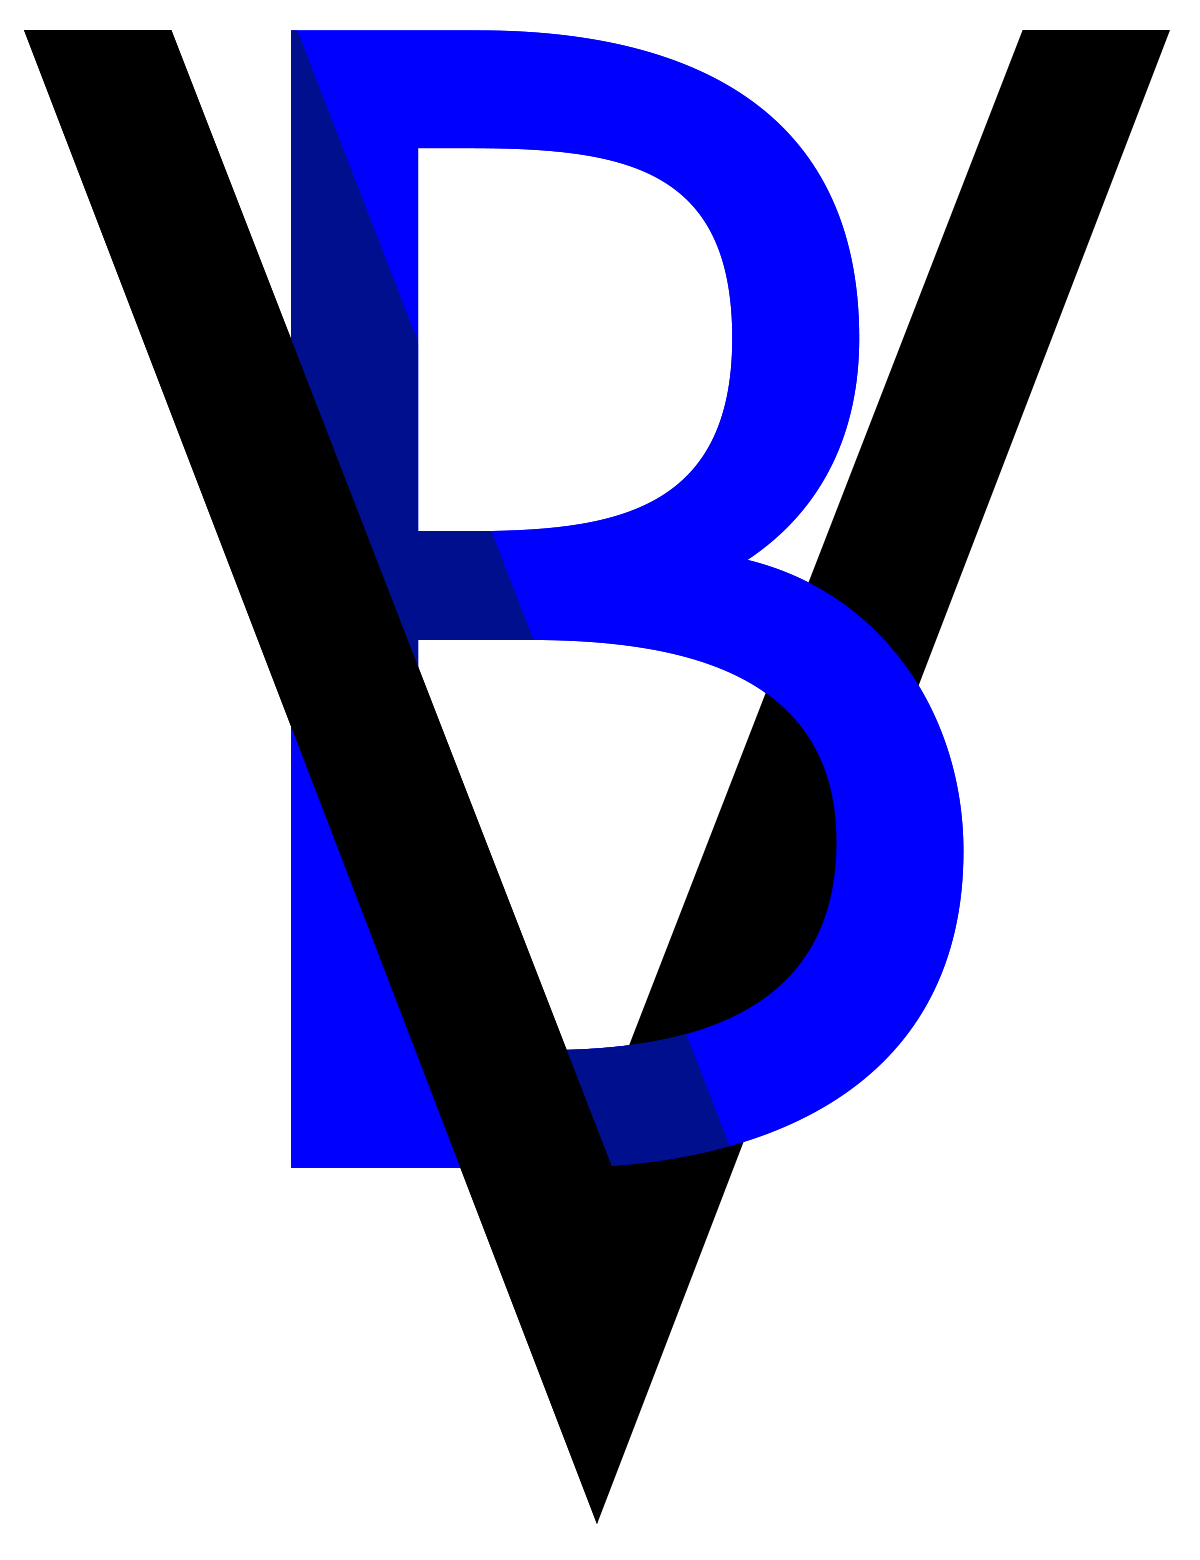 Azul v logo PNG photo